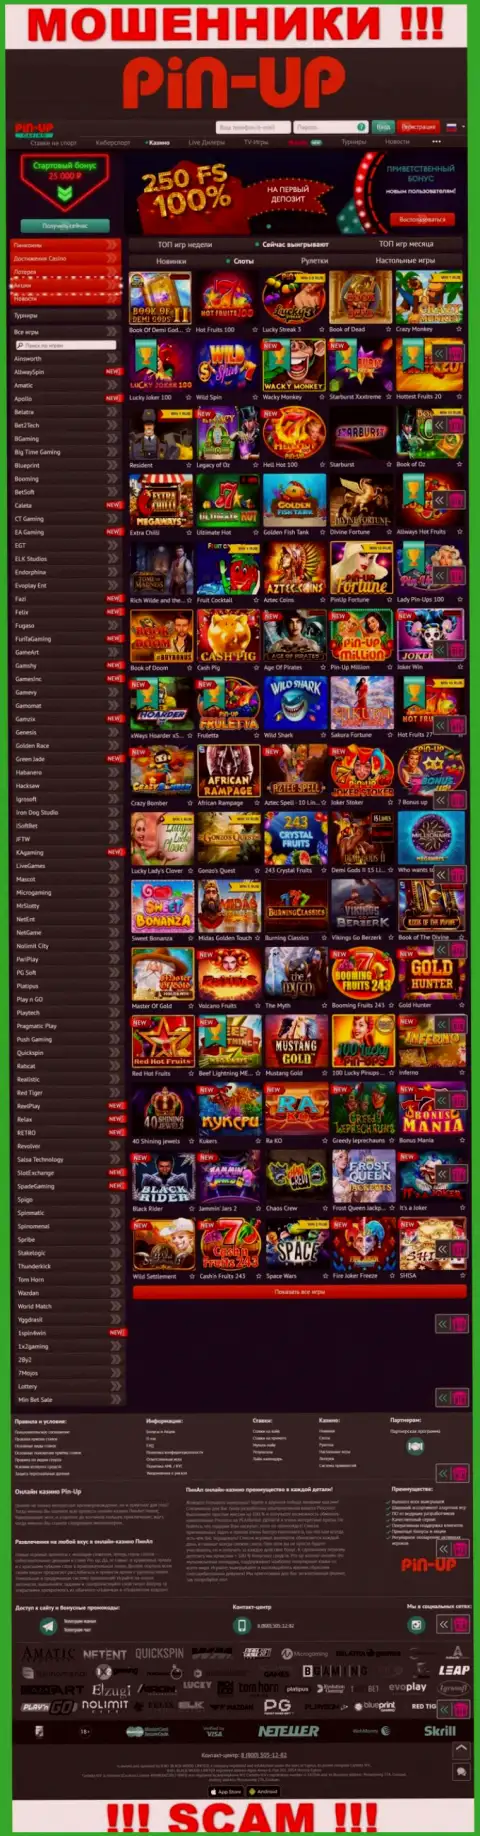 Pin-Up Casino - официальный web-сайт internet-лохотронщиков Pin UpCasino